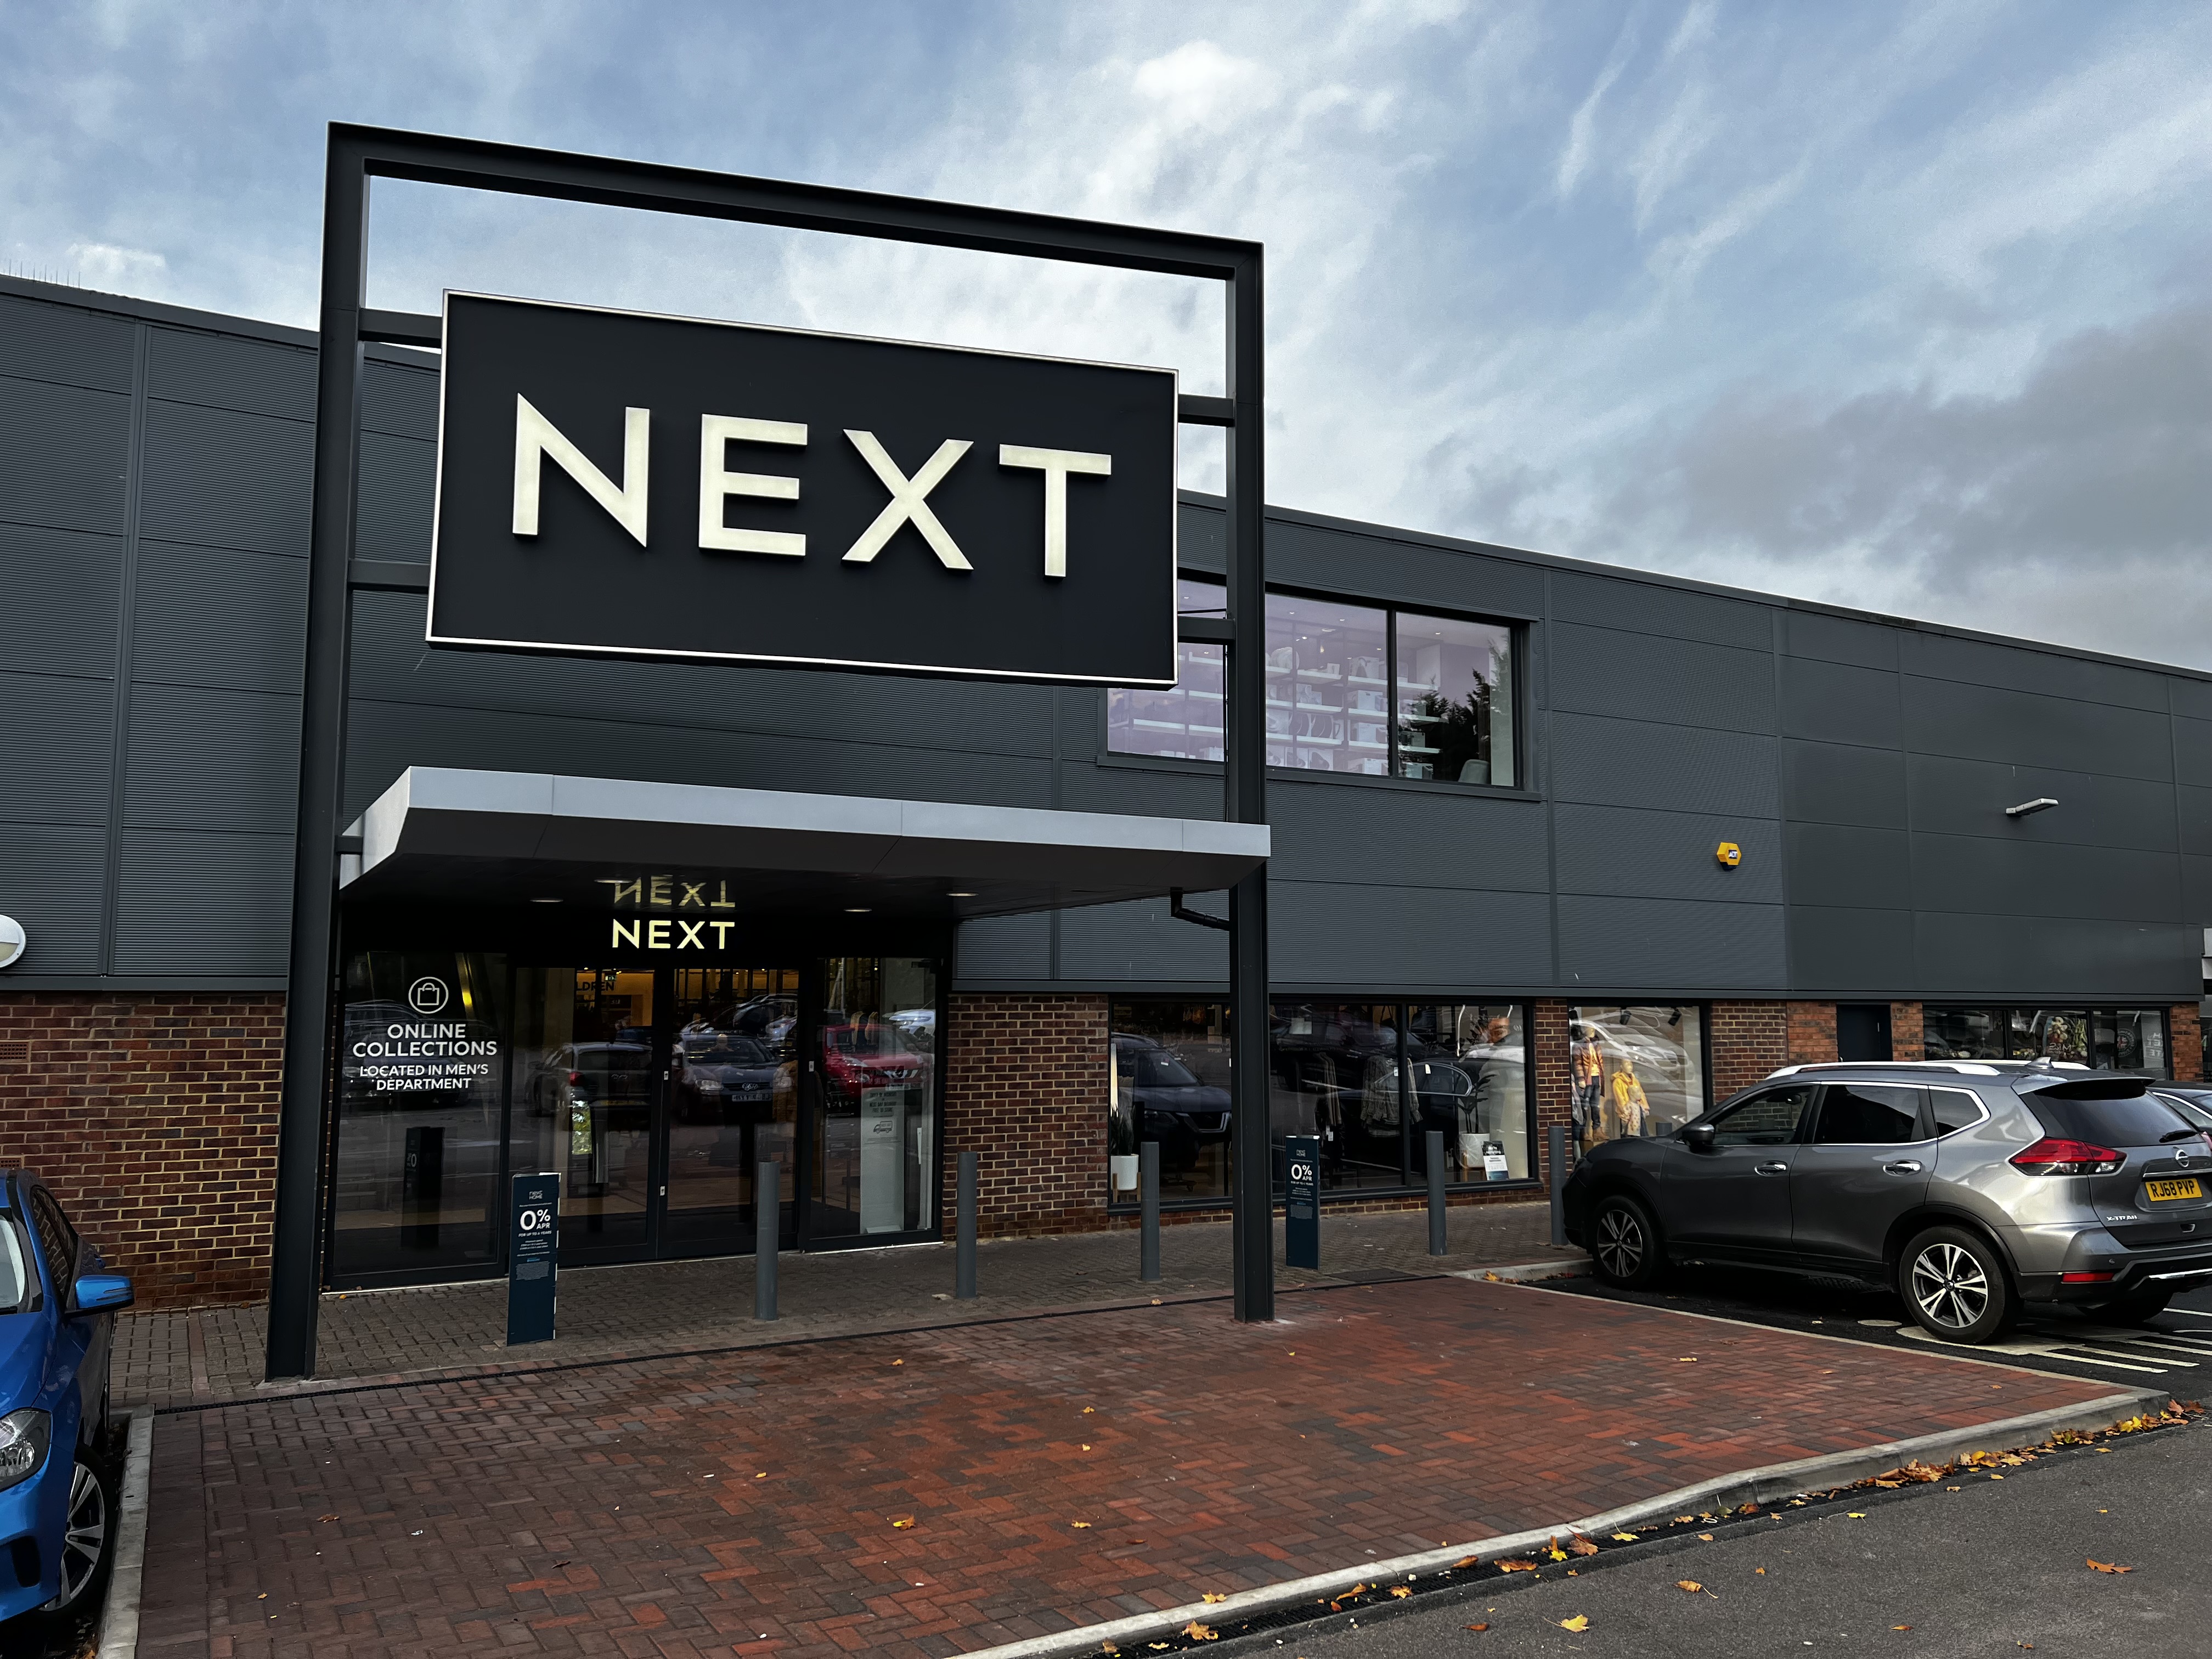 Next - Aylesbury - Broadfields Retail Park